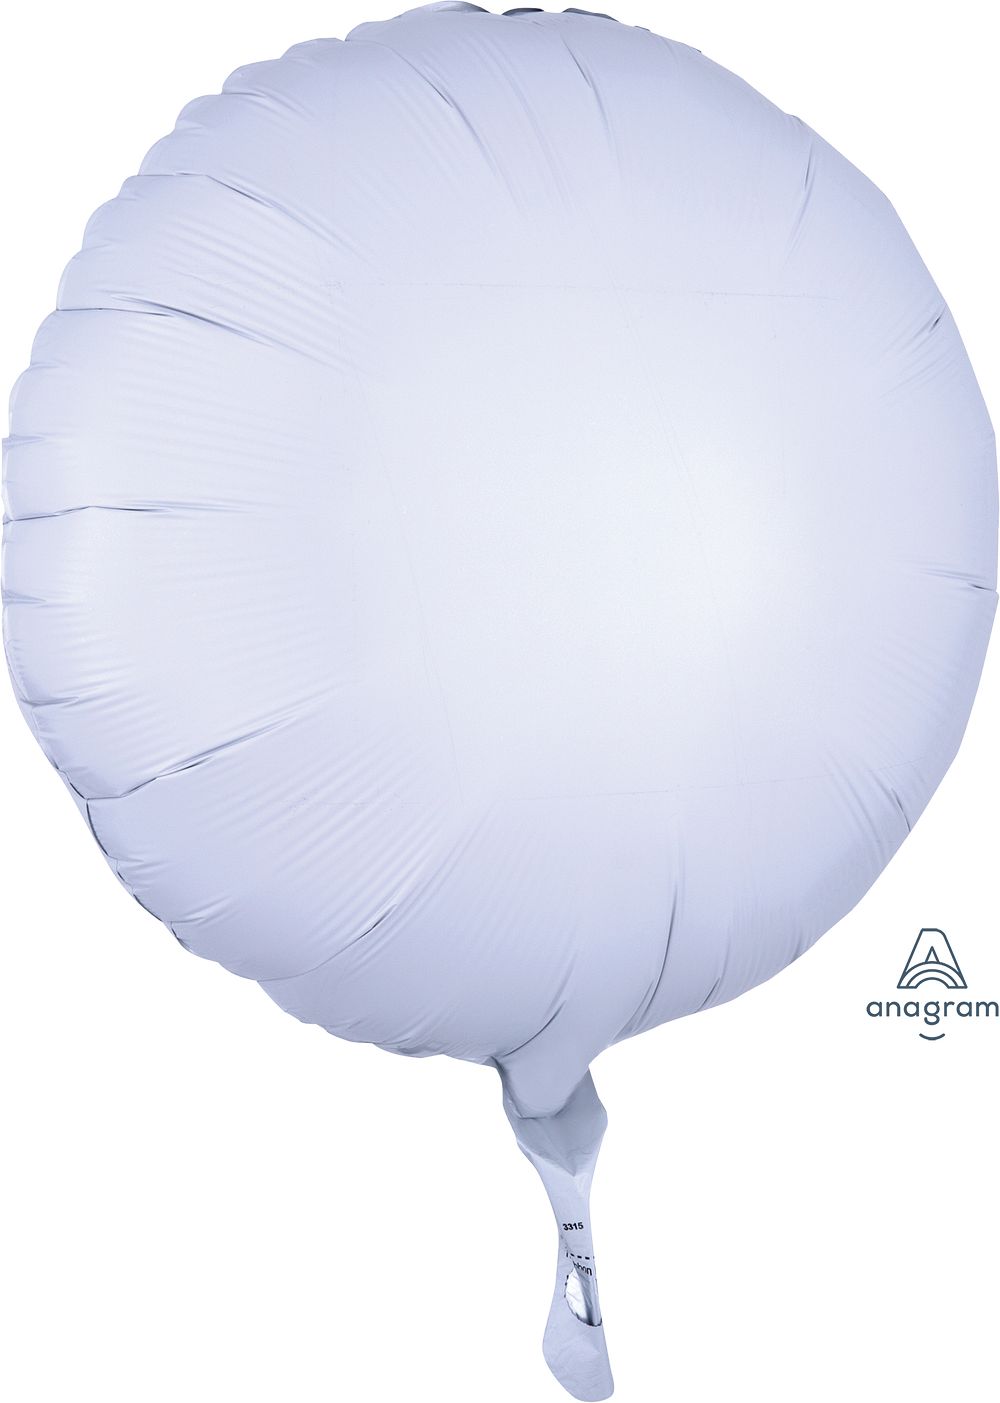 Picture of 18" Metallic White Circle Foil Balloon (helium-filled) 